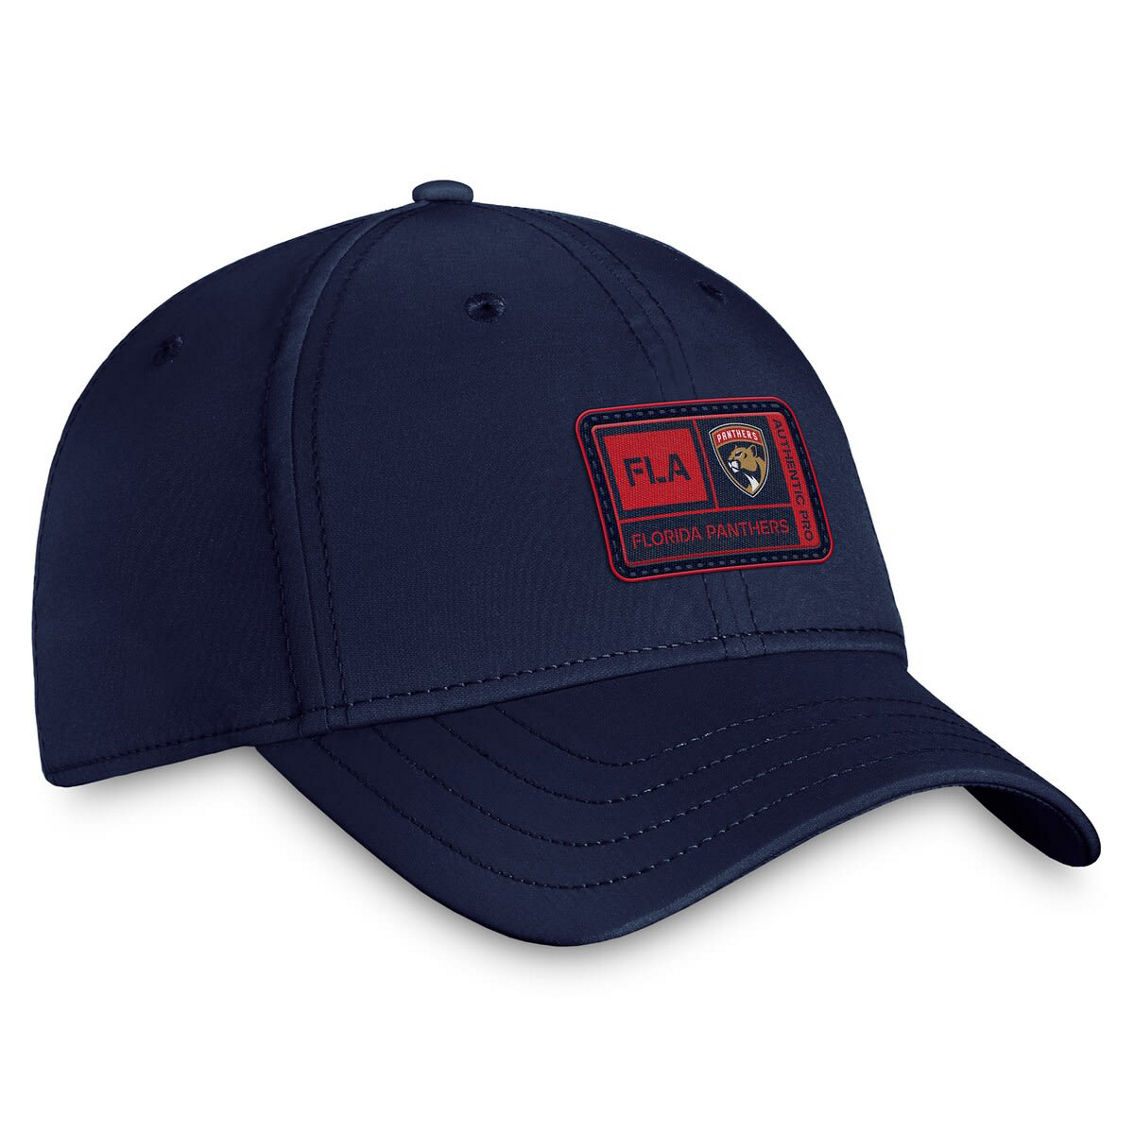 Fanatics Branded Men's Navy Florida Panthers Authentic Pro Training Camp Flex Hat - Image 4 of 4